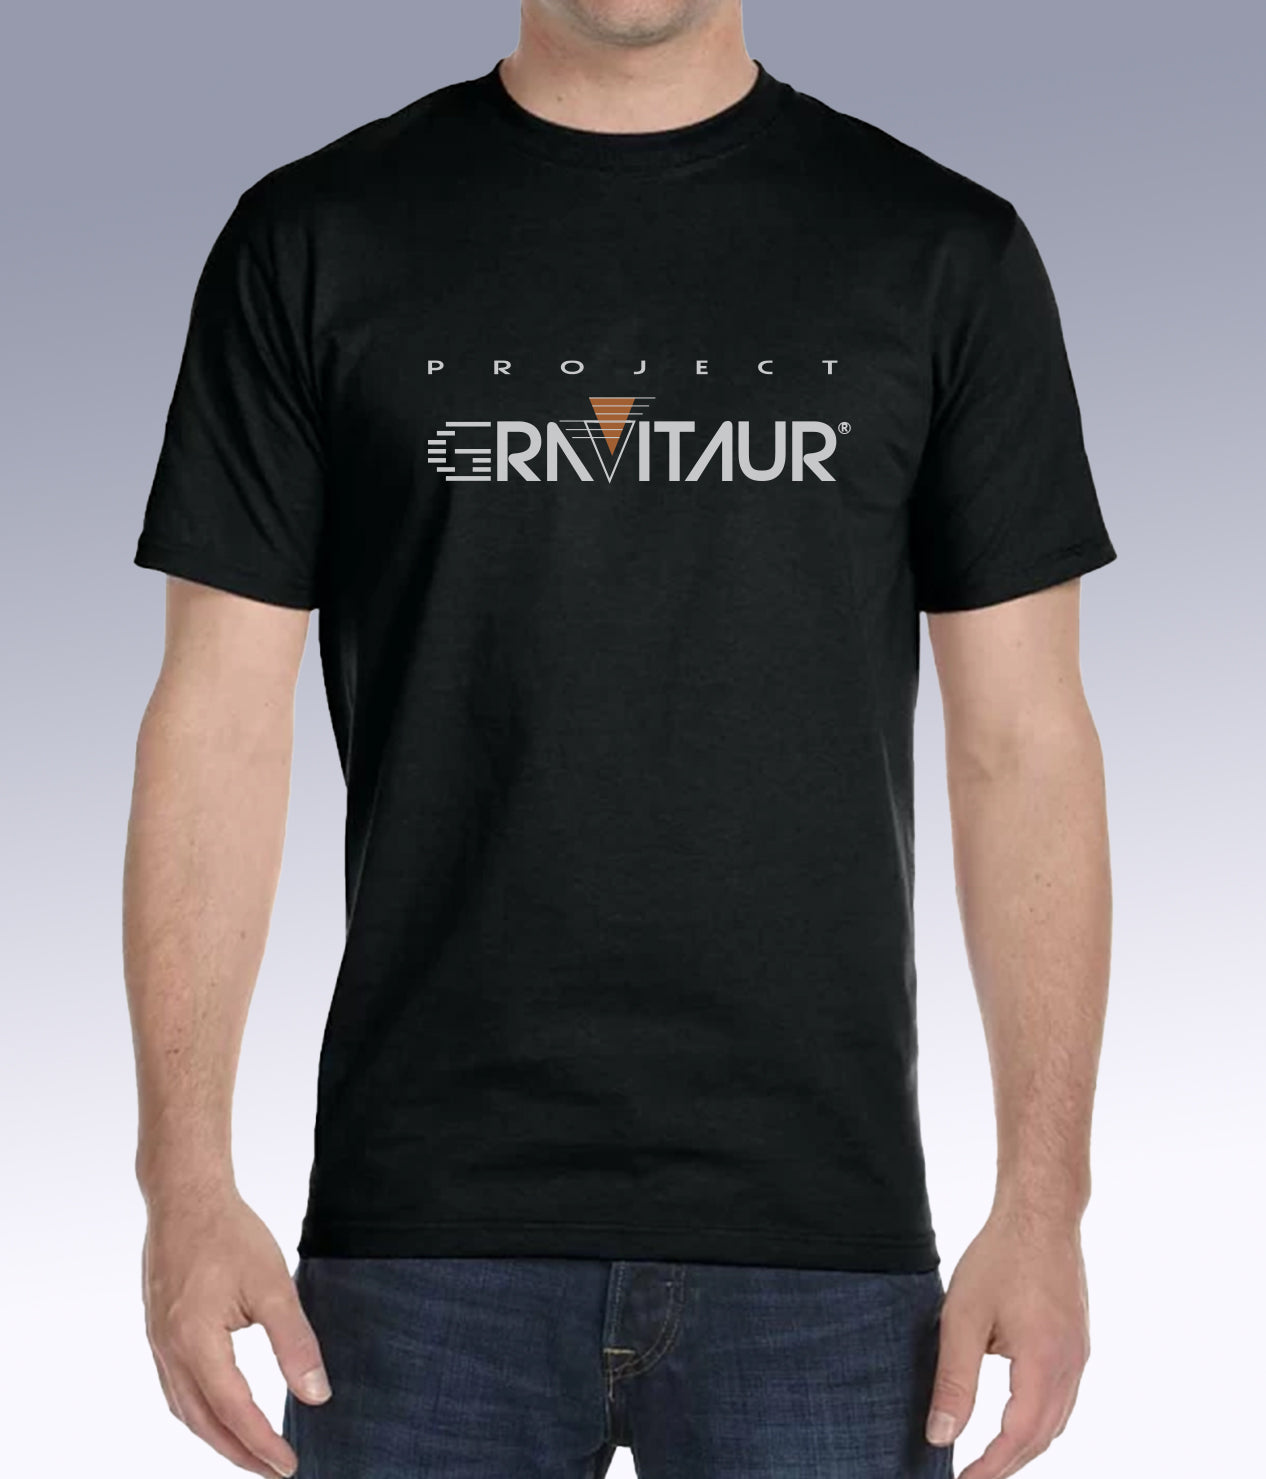 Project Gravitaur T-Shirt